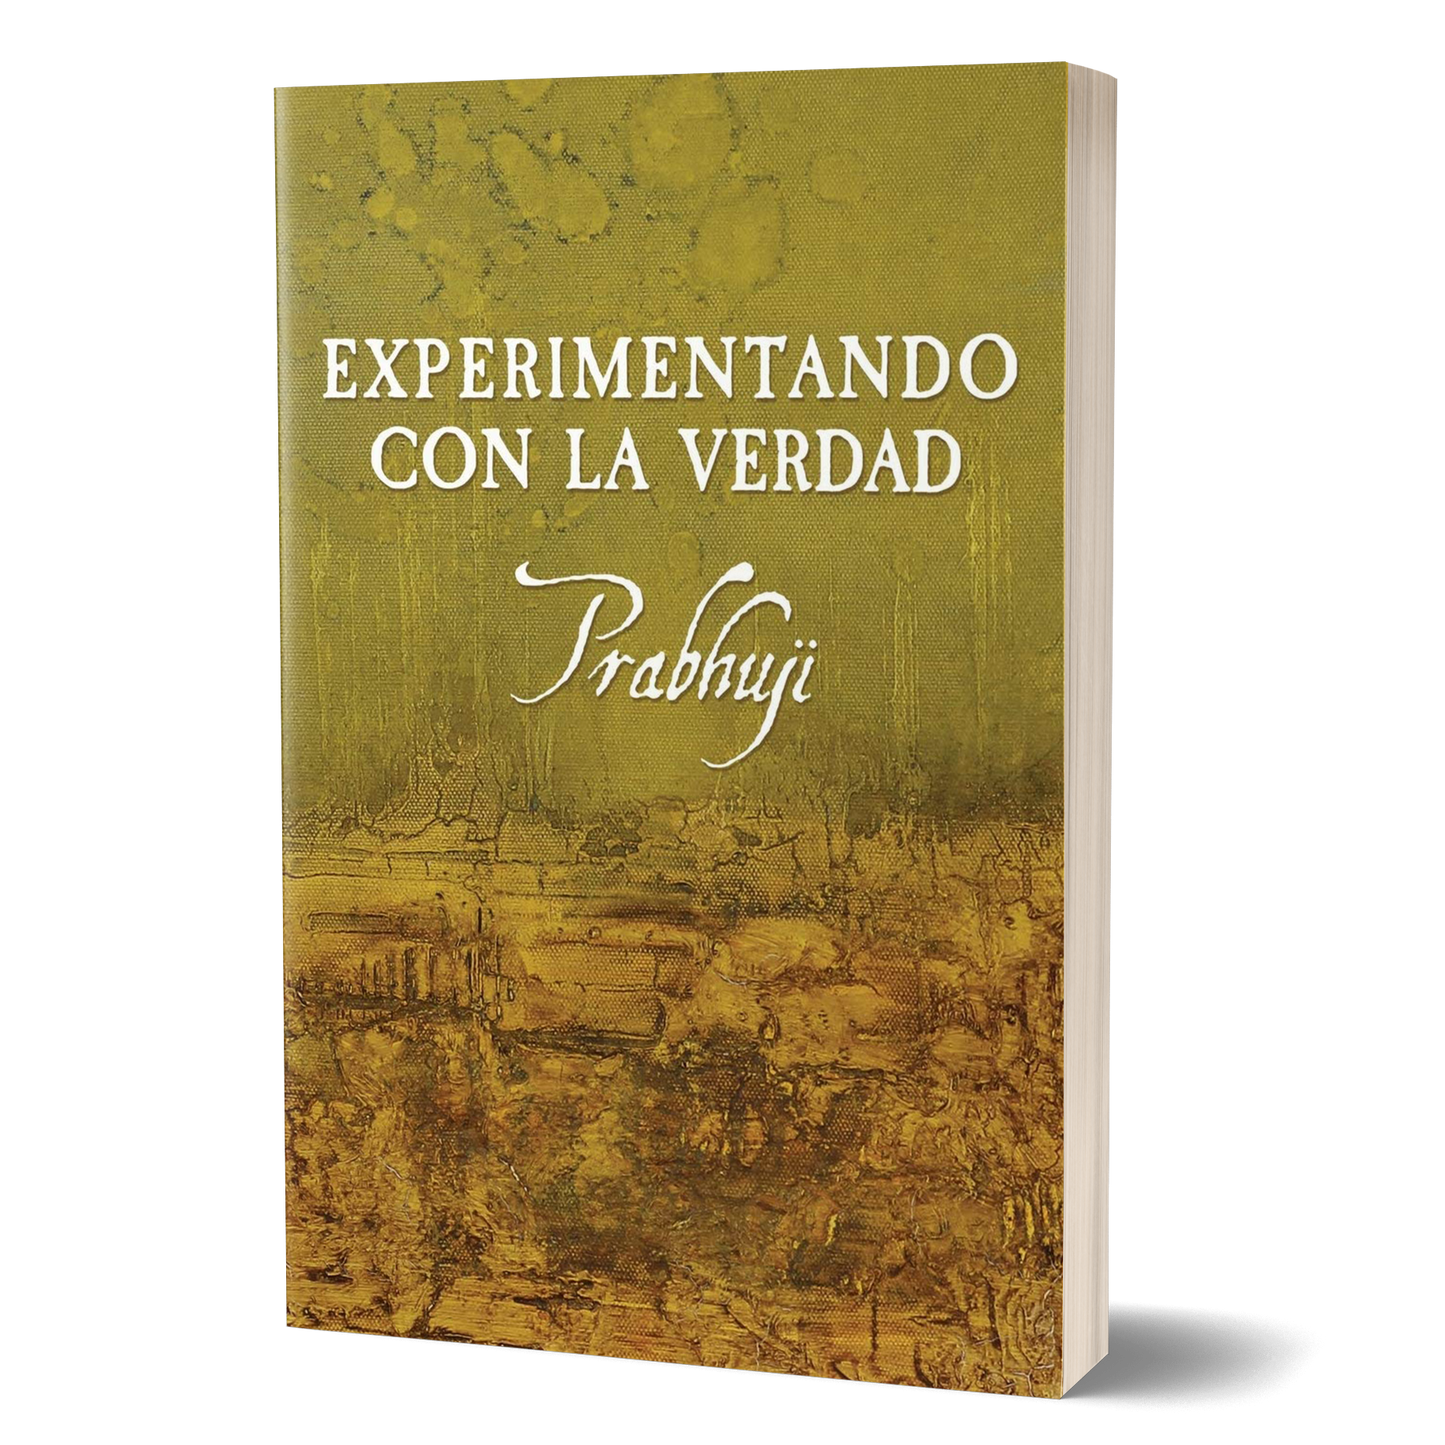 Book Experimentando con la verdad con Prabhuji (Paperback - Spanish)